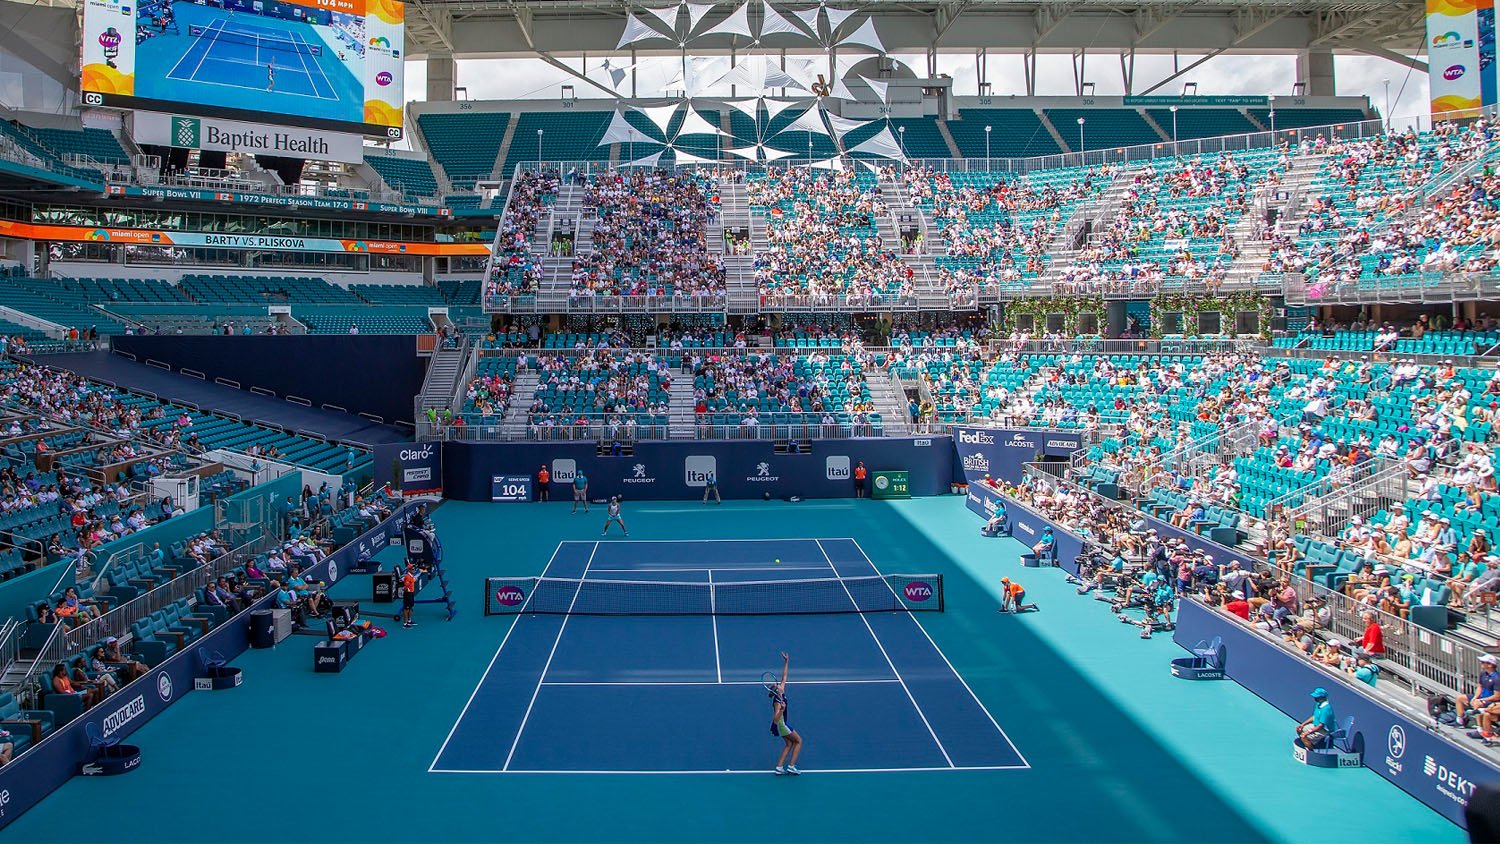 US Miami surface - Tennis court construction